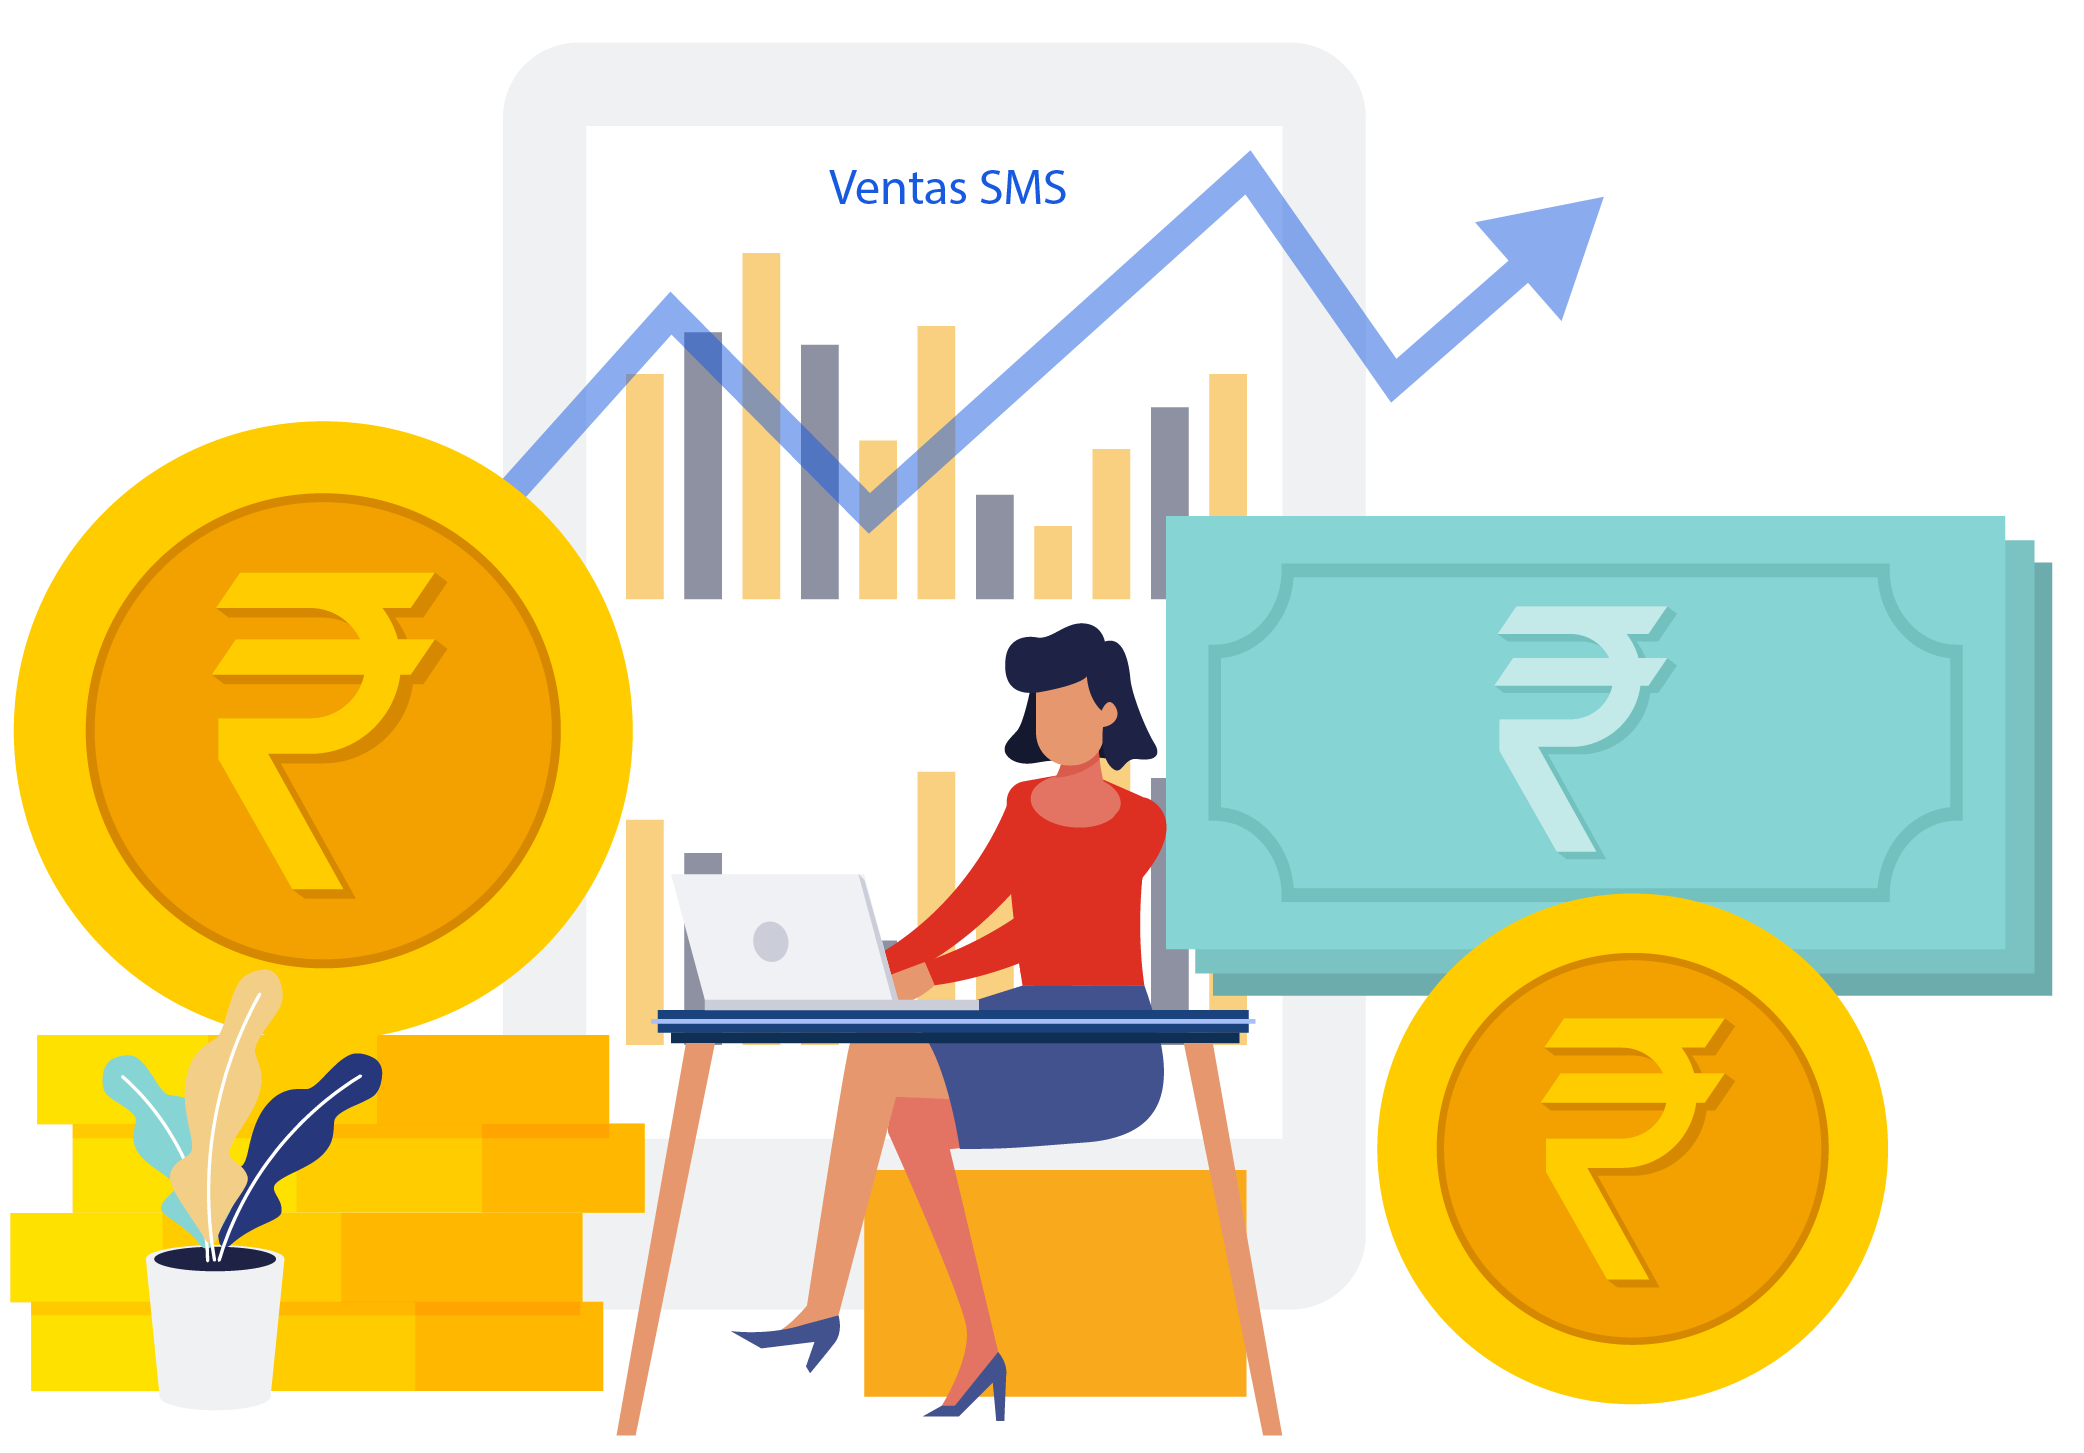 Ventas SMS for Capital Market image